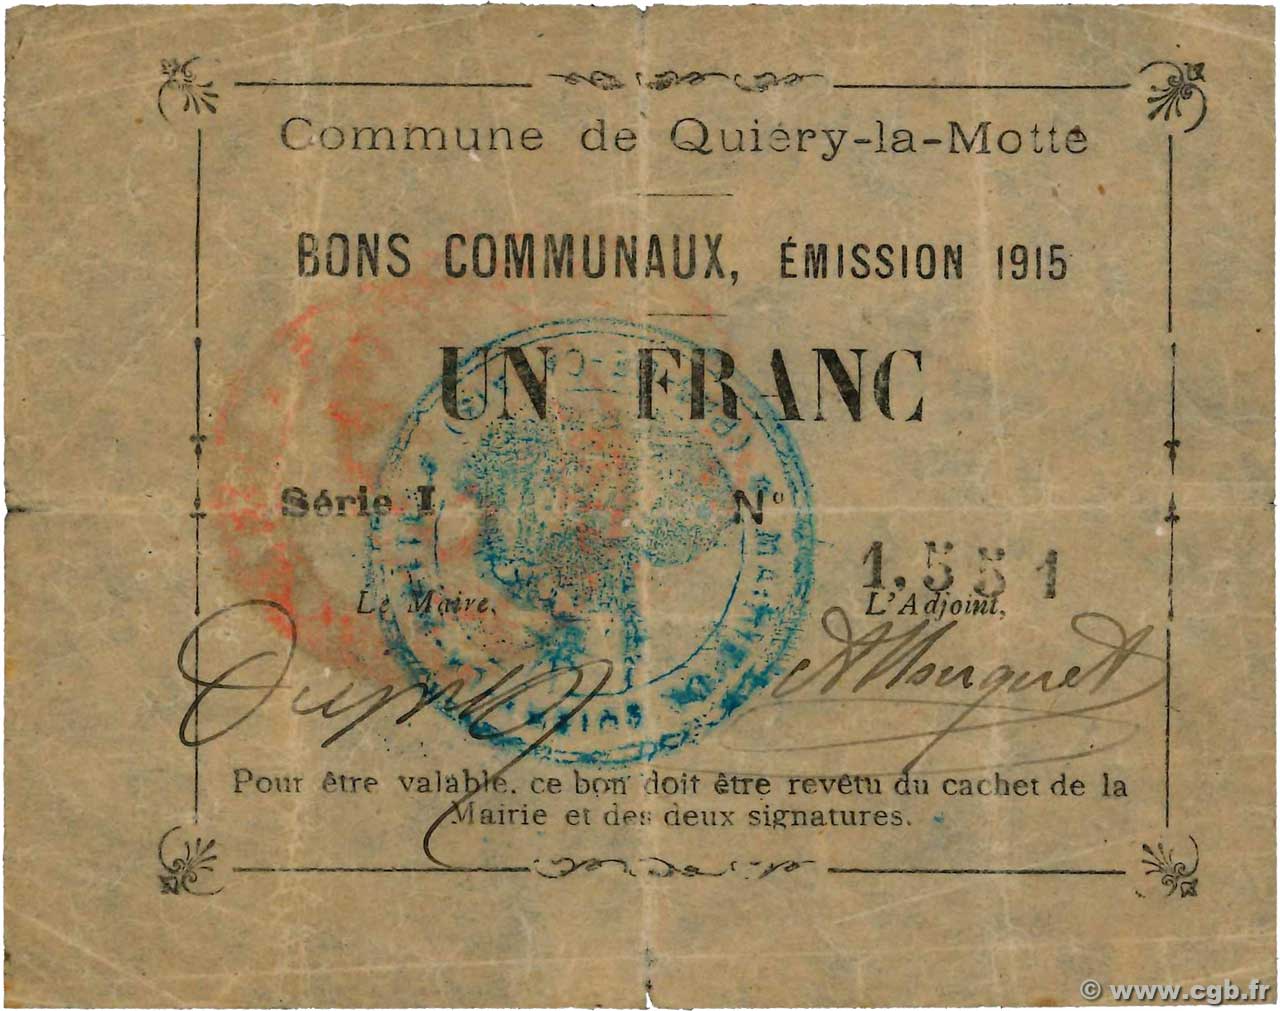 1 Franc FRANCE Regionalismus und verschiedenen Quiery-La-Motte 1915 JP.62-1152 SS